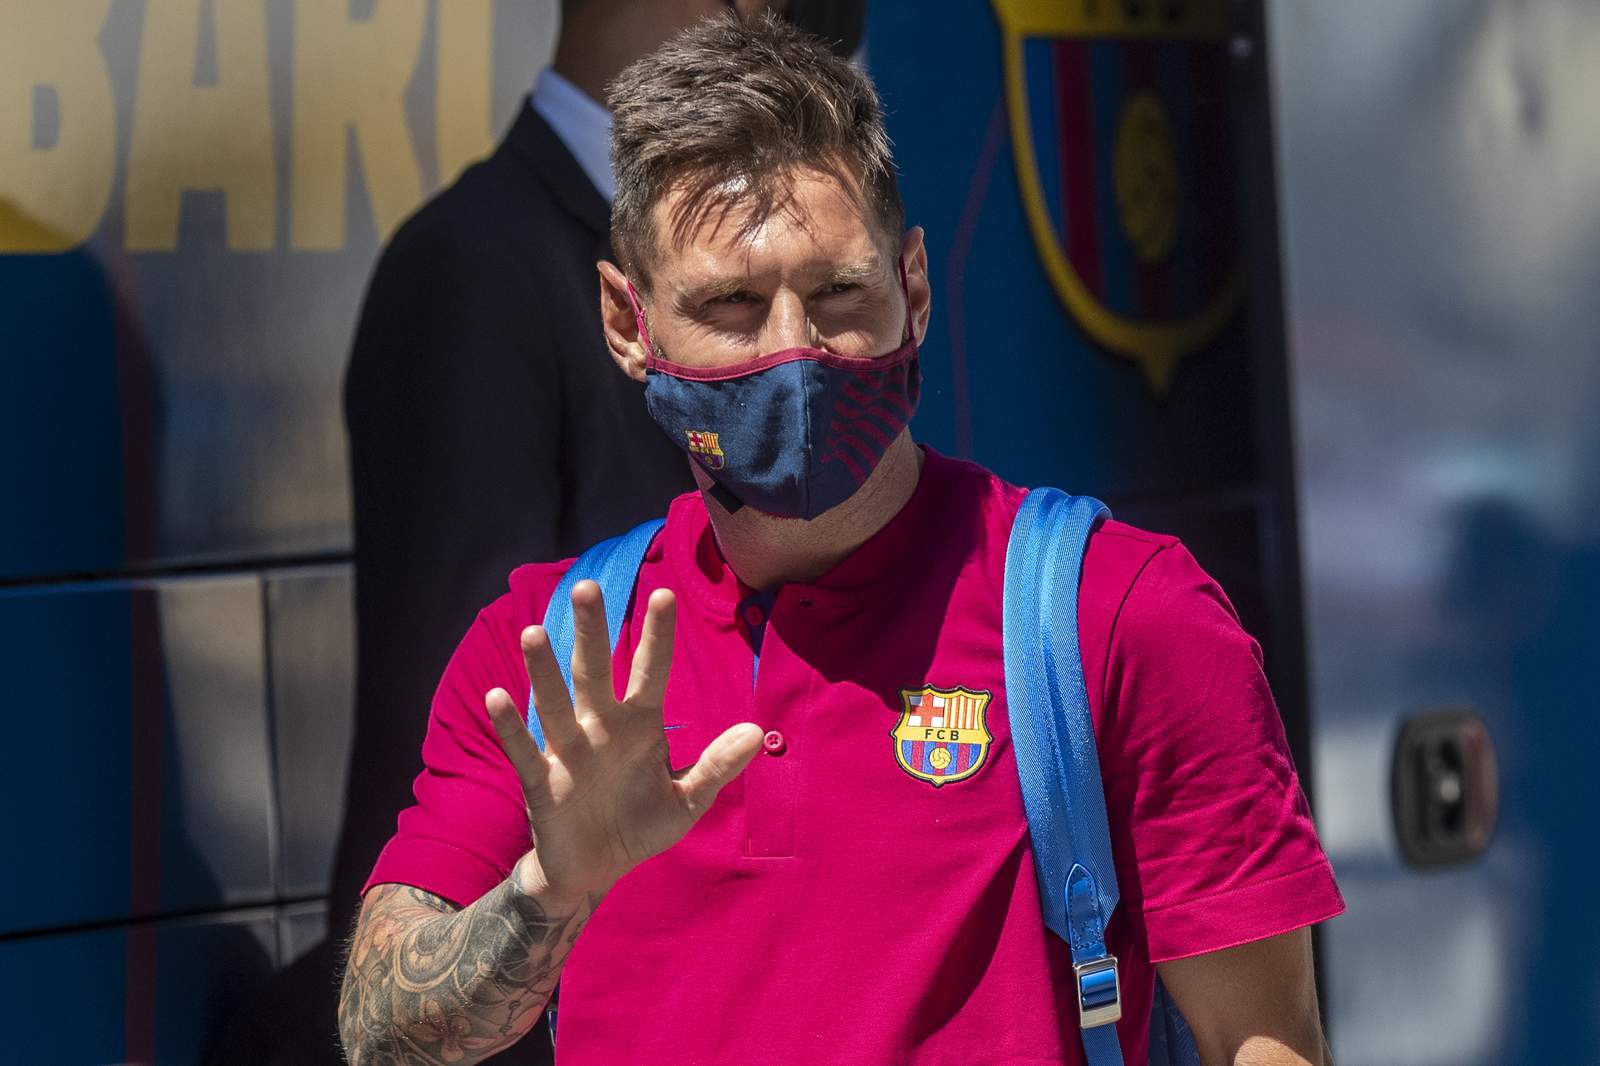 Messi skips required coronavirus testing with Barcelona